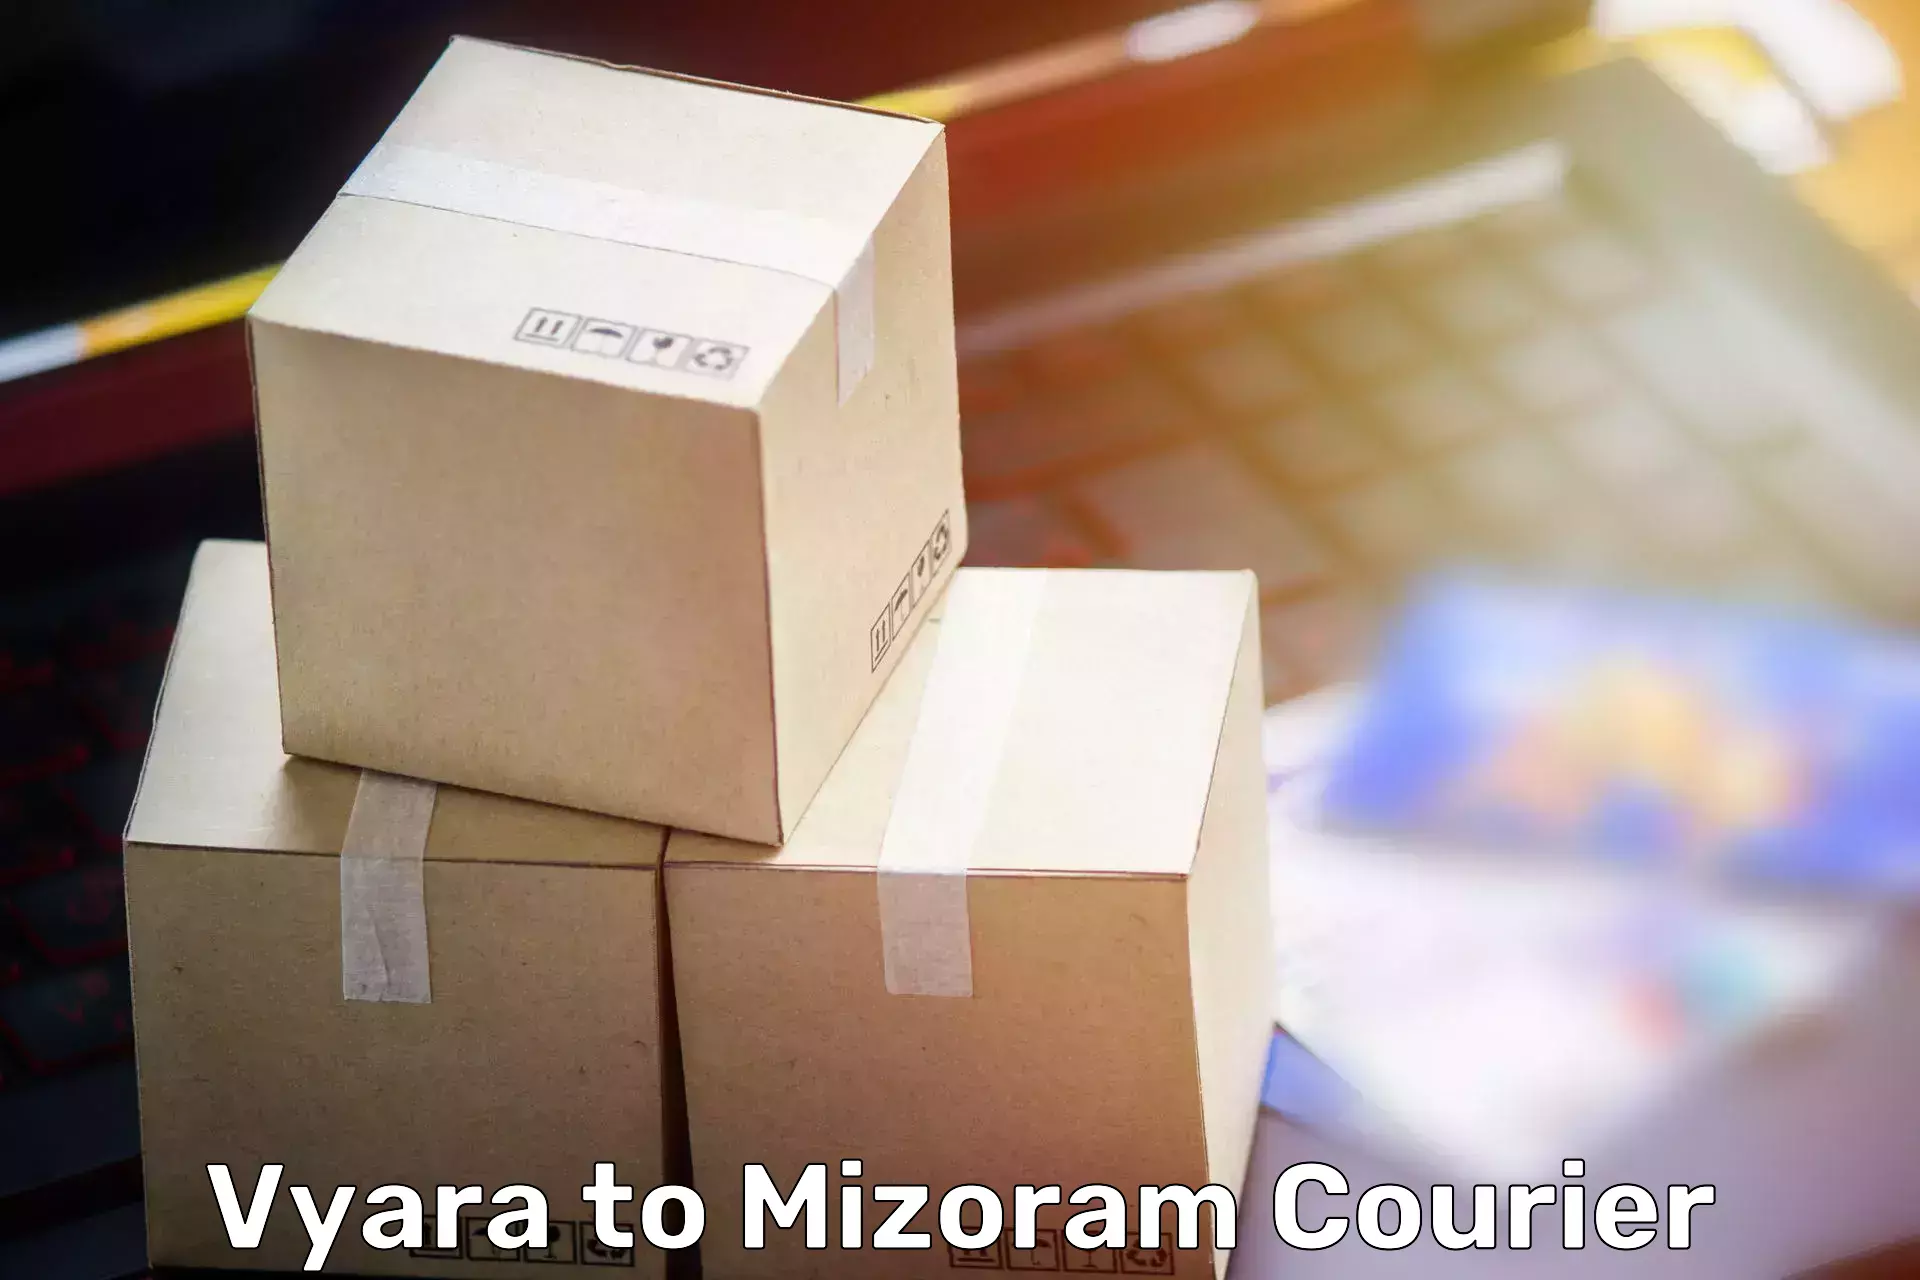 Furniture delivery service Vyara to Mizoram